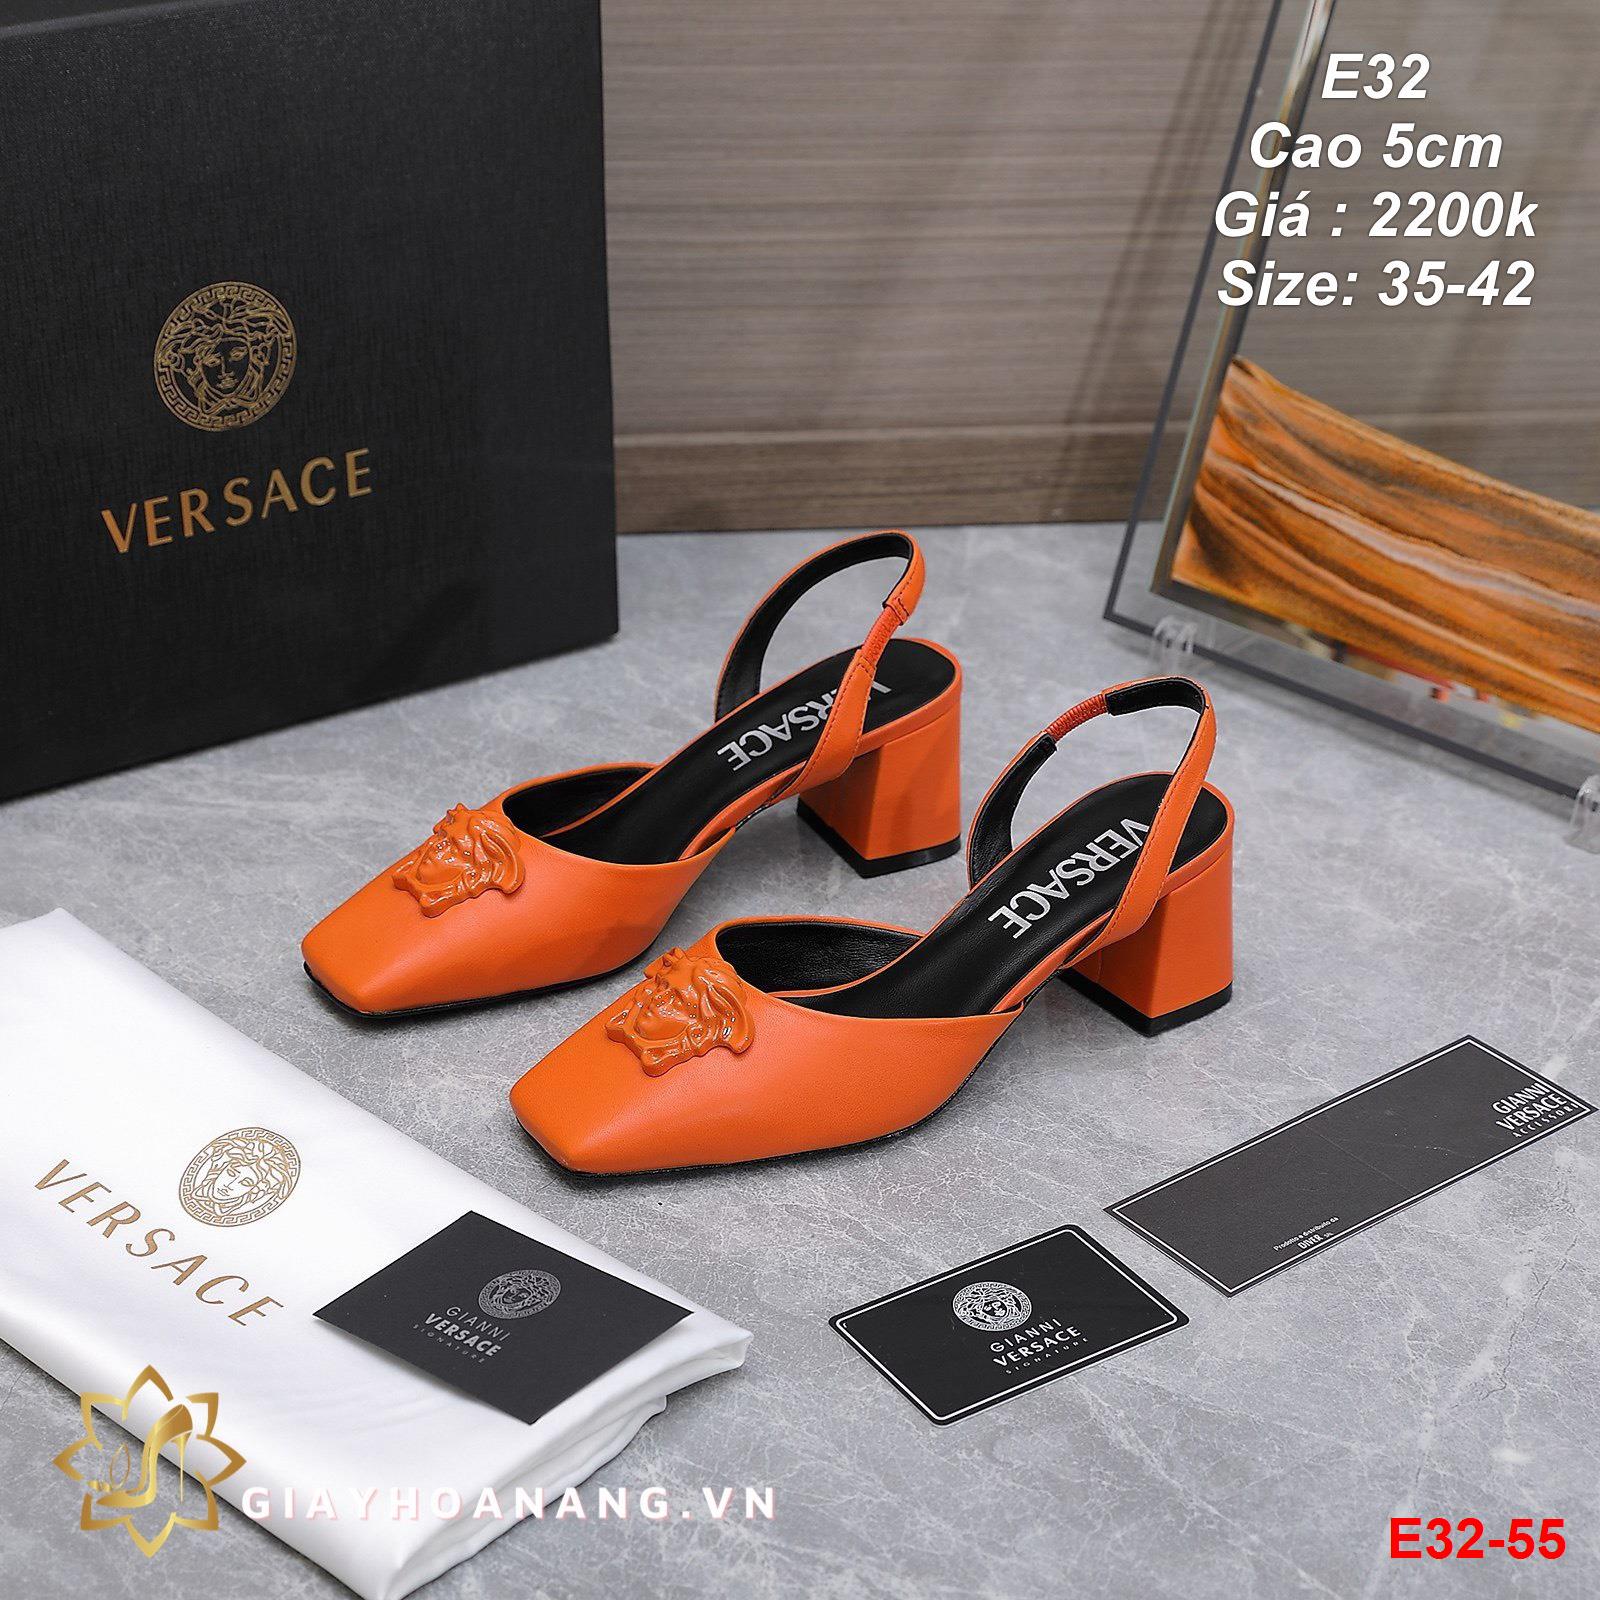 E32-55 Versace sandal cao 5cm siêu cấp